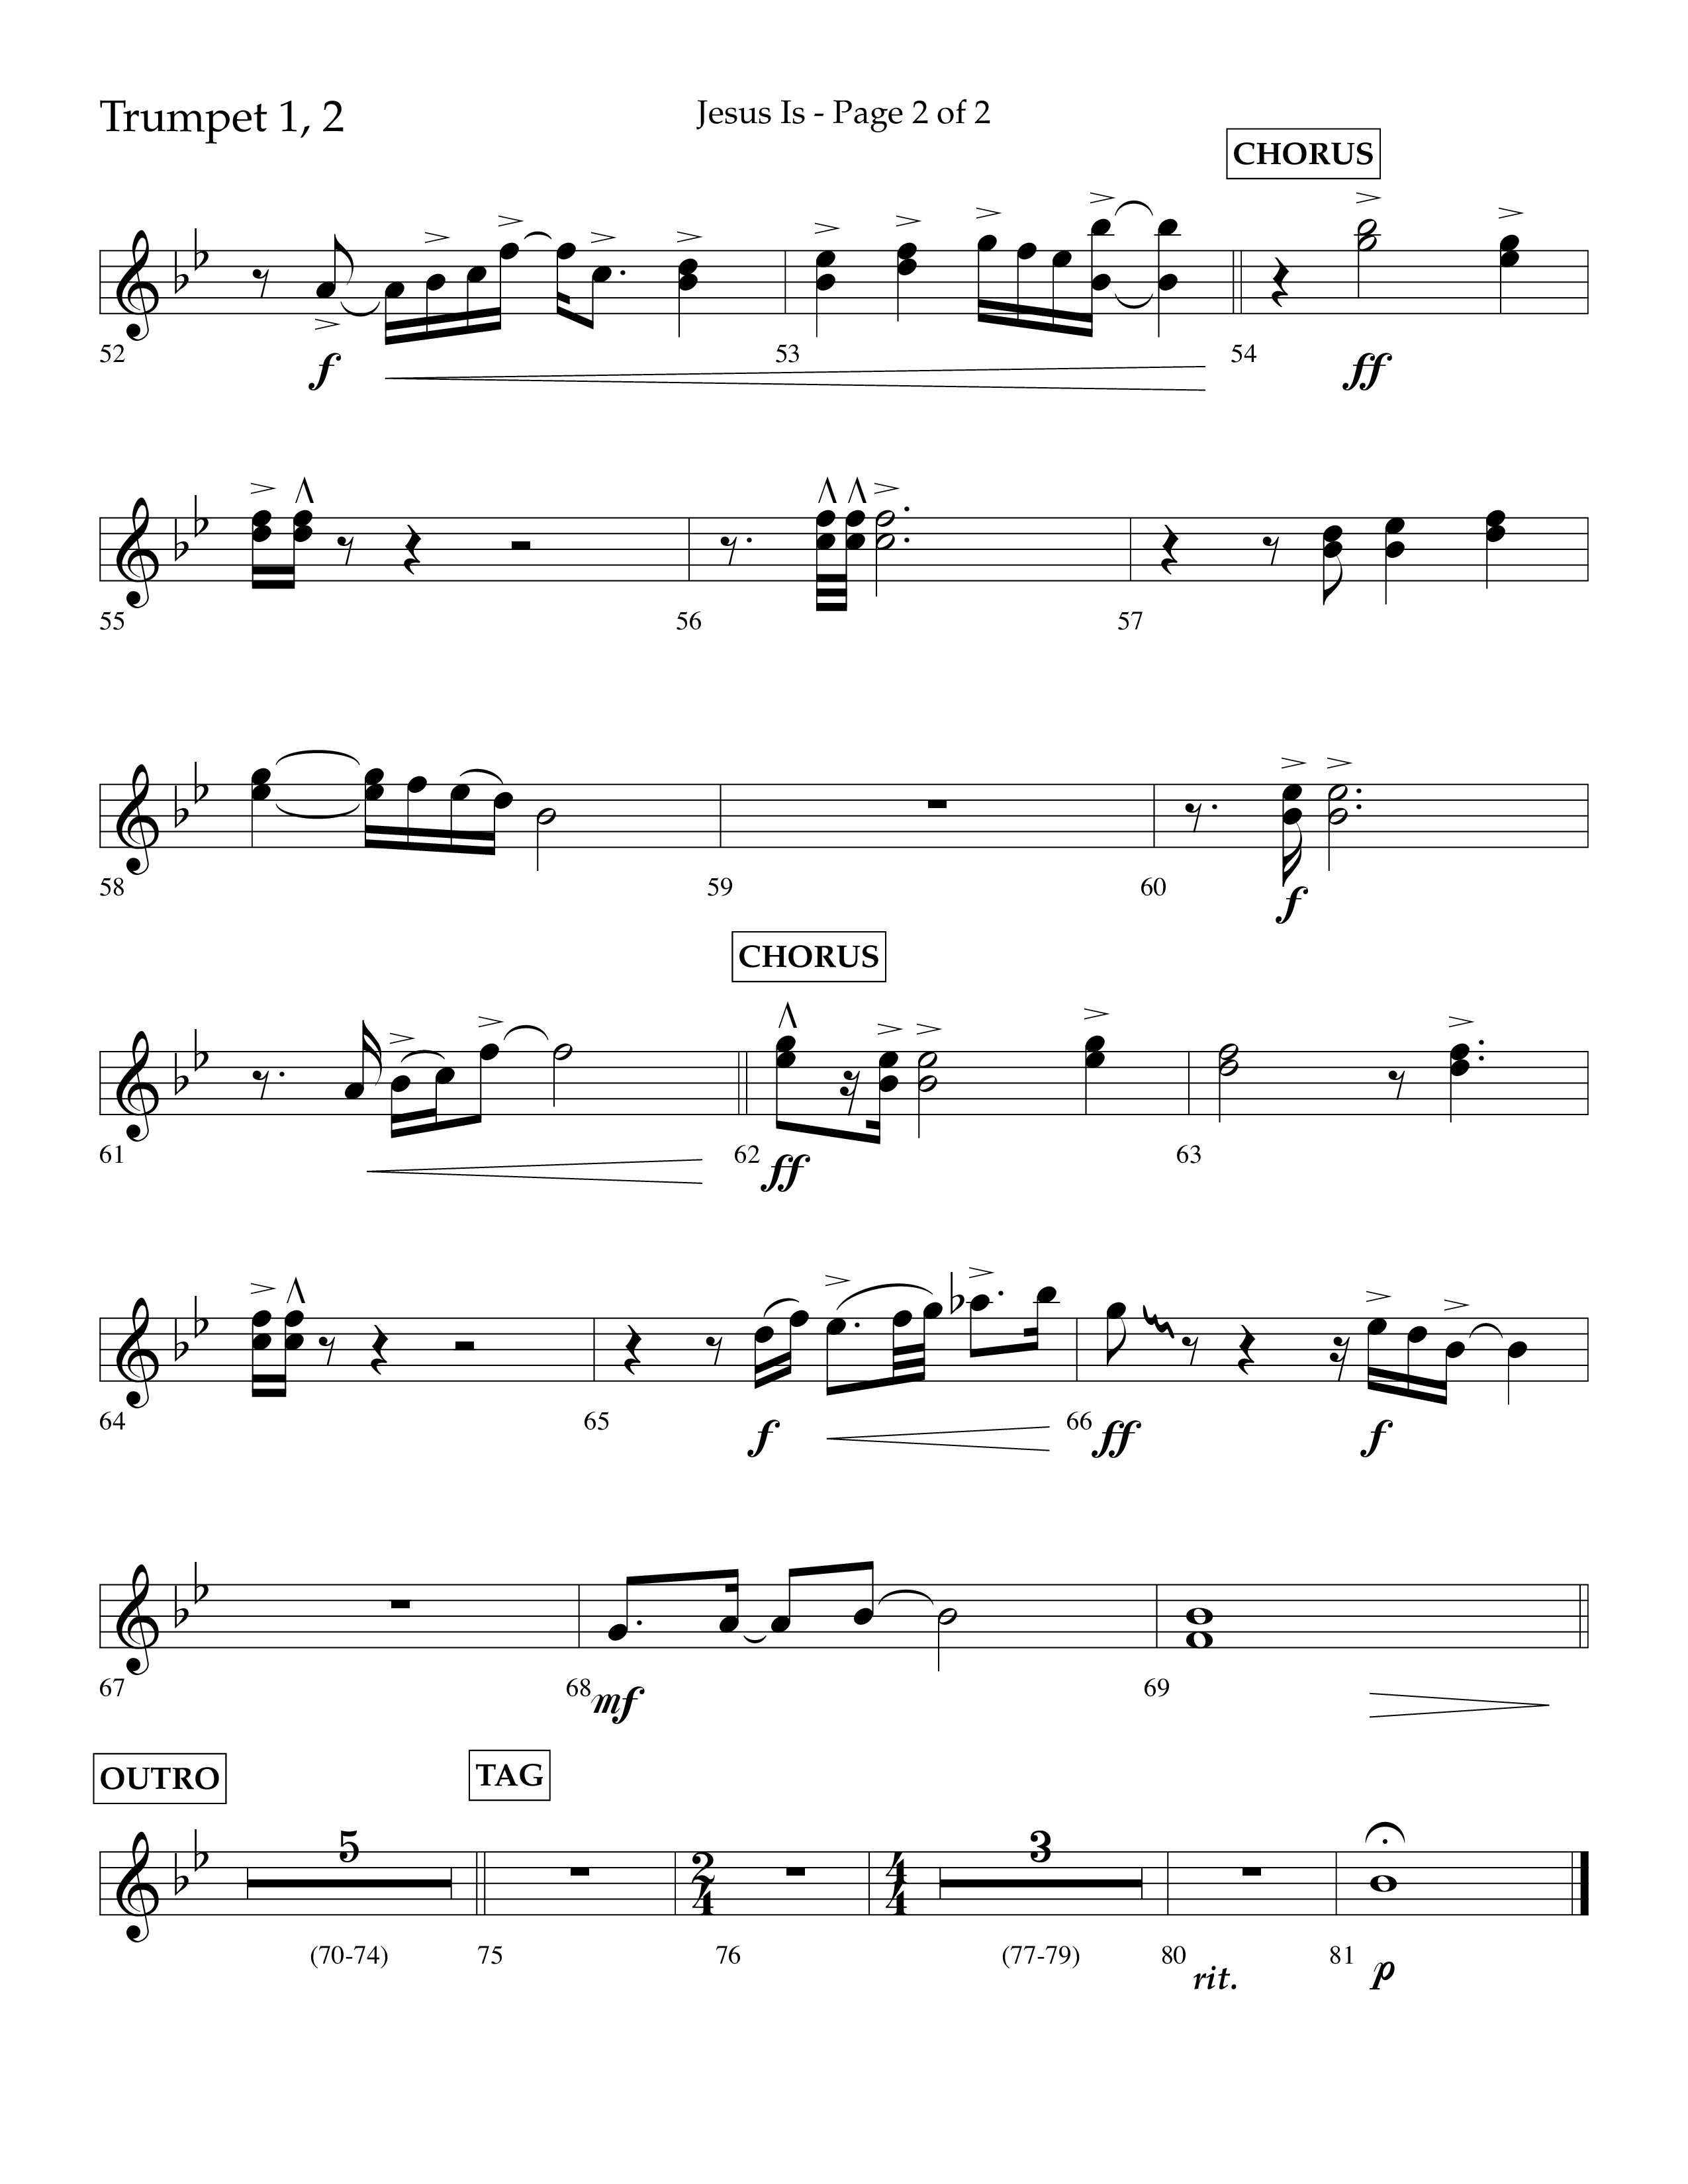 Jesus Is (Choral Anthem SATB) Trumpet 1,2 (Lifeway Choral / Arr. John Bolin / Arr. Don Koch / Orch. Cliff Duren)